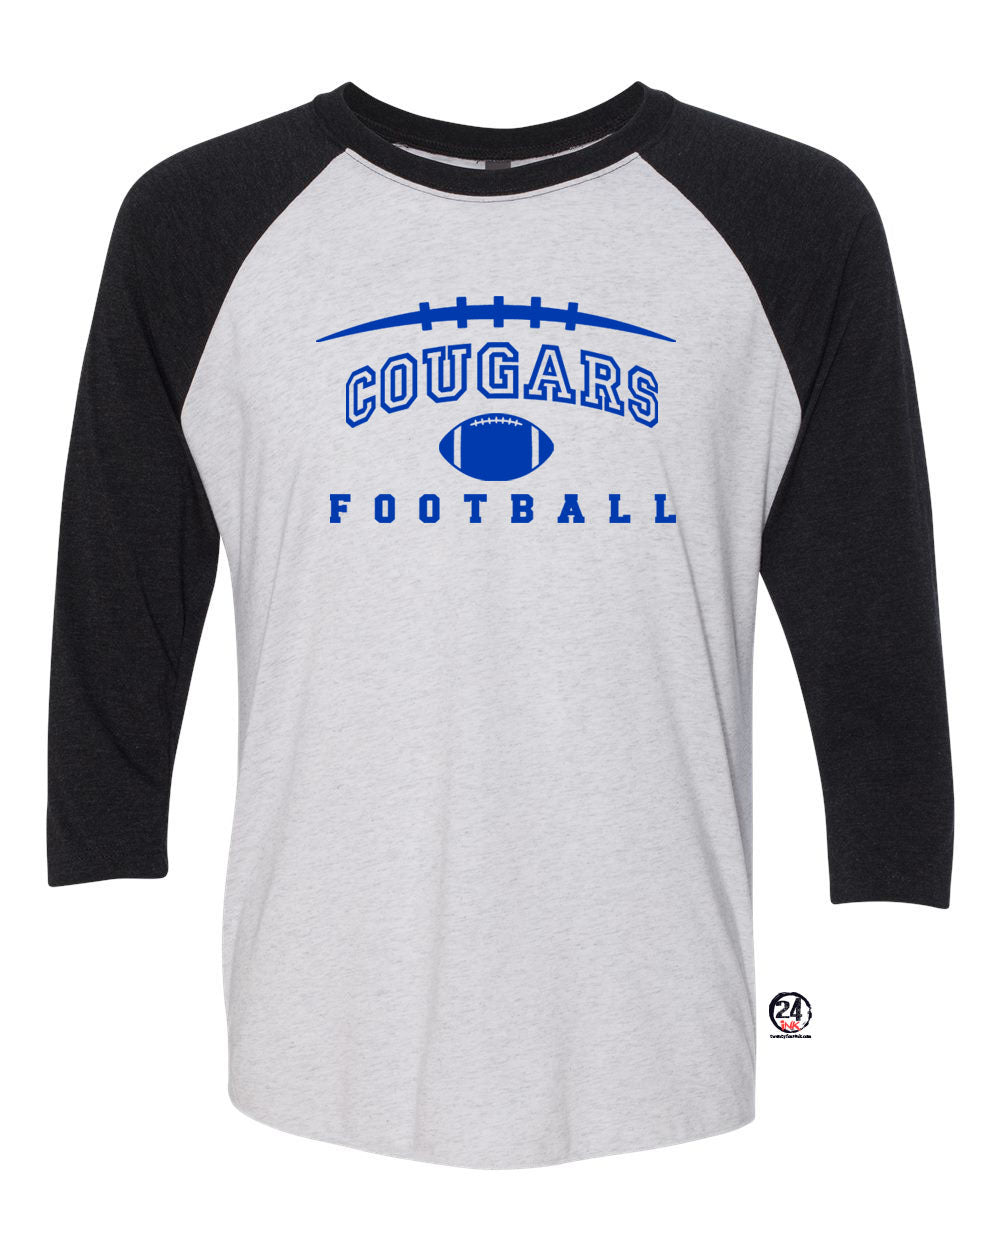 Cougars Football raglan shirt